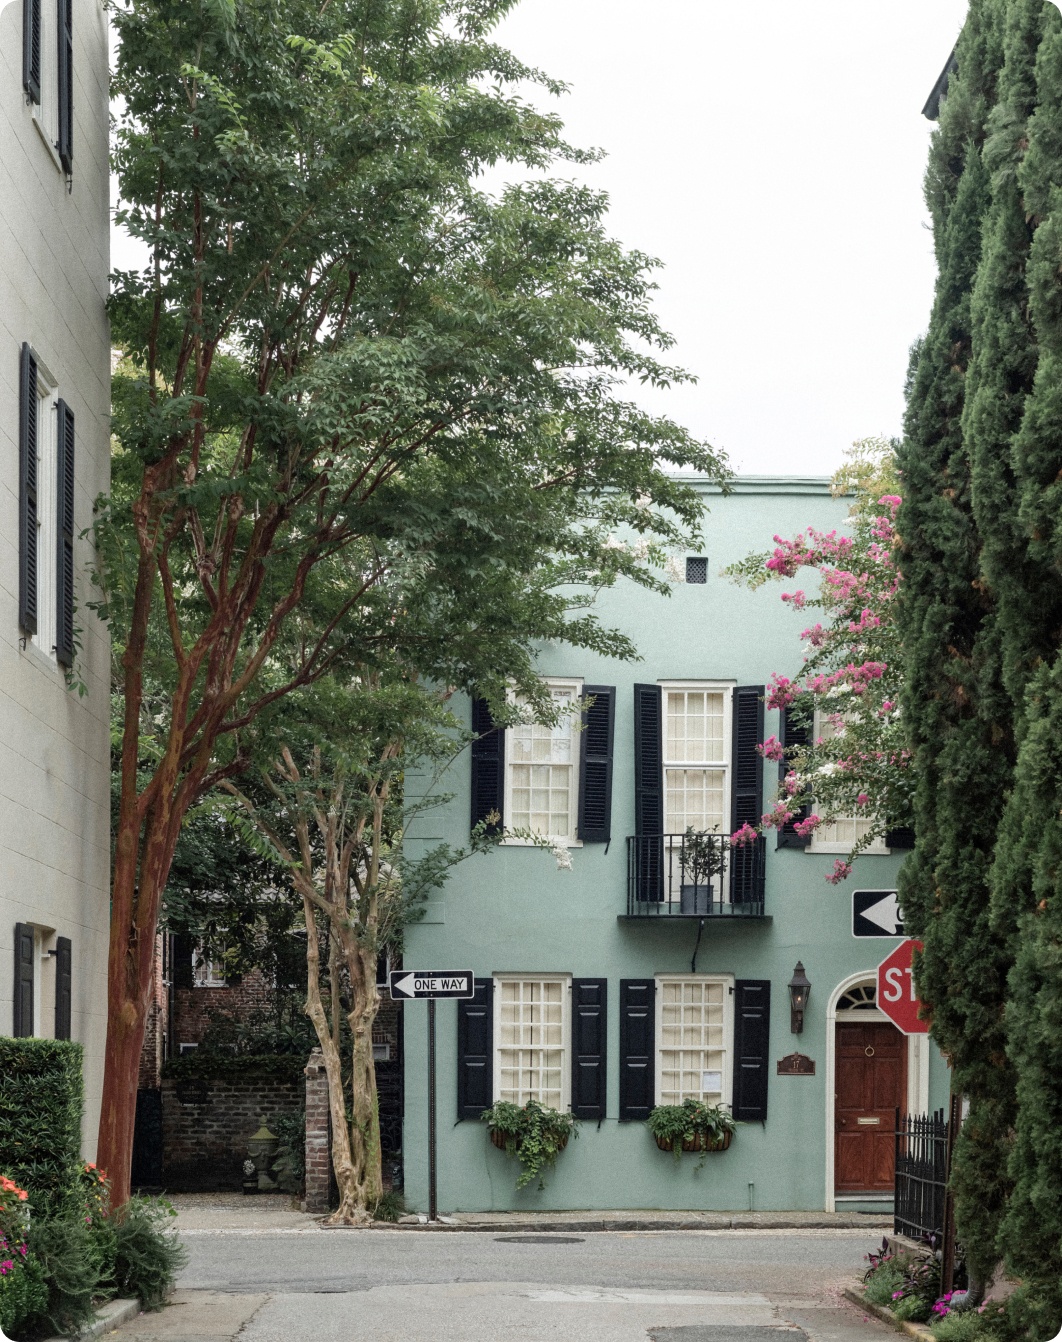 How Do Those Holidaying in Charleston Measure Luxury?